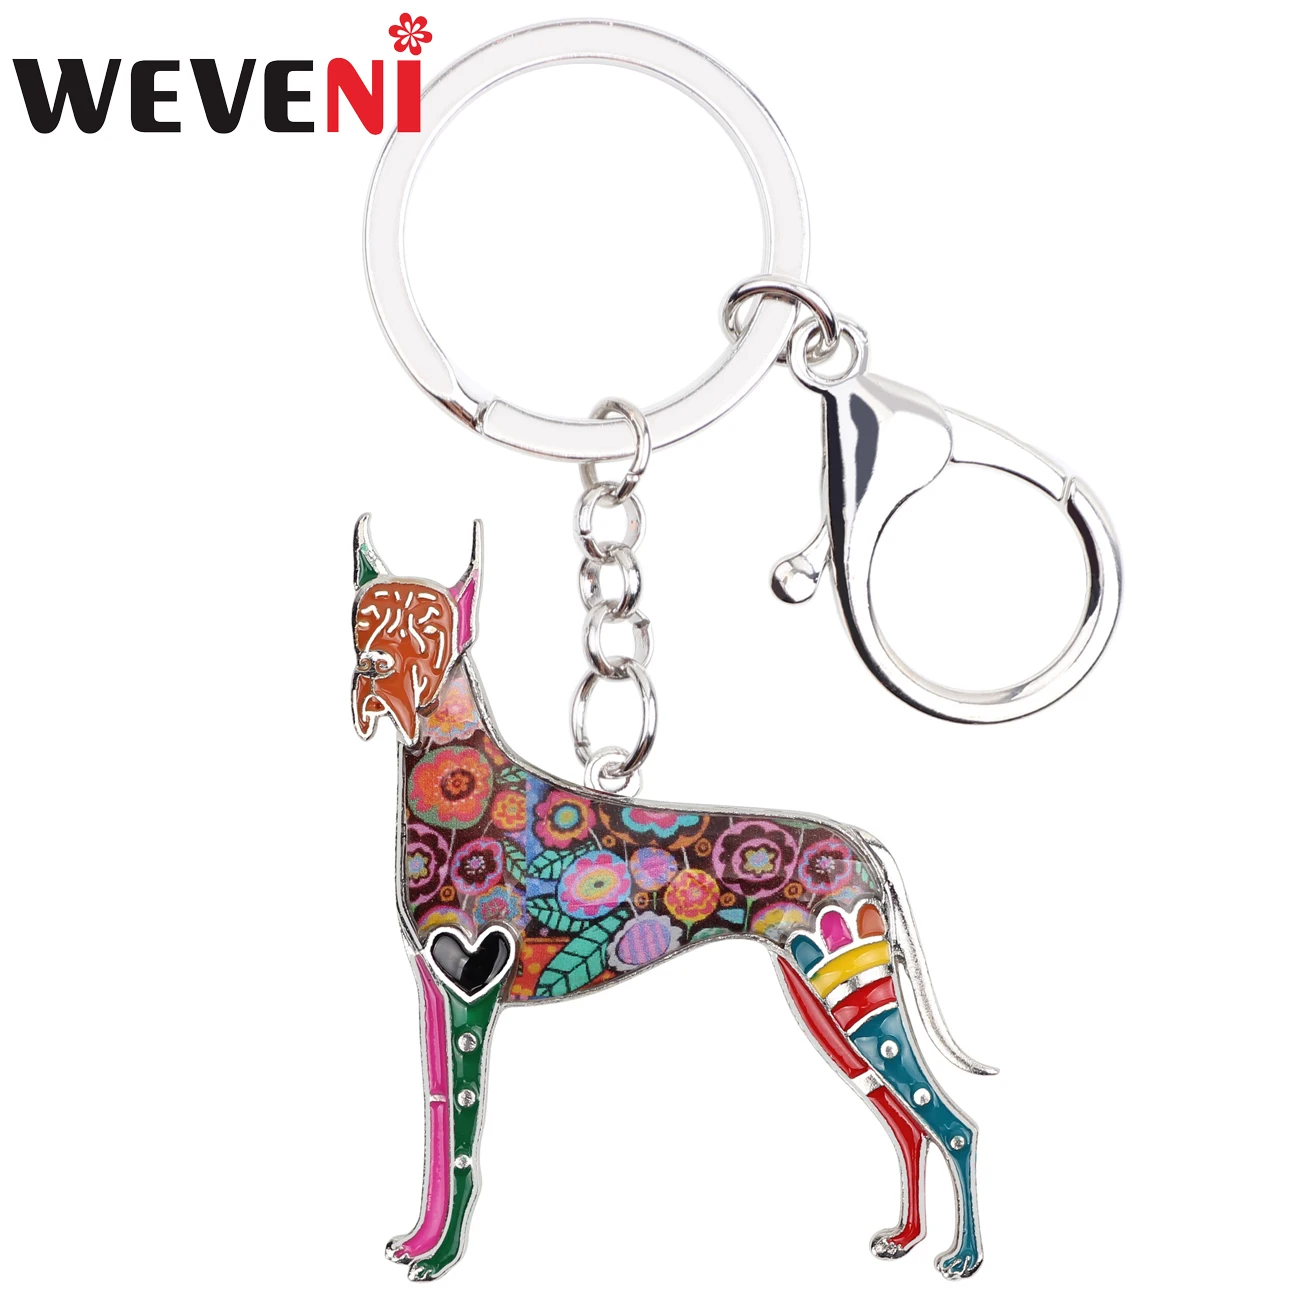 

WEVENI Enamel Metal Great Dane Dog Key Chains Keychains Holder Animal Jewelry For Women Girls Pet Lovers Car Bag Purse Charms